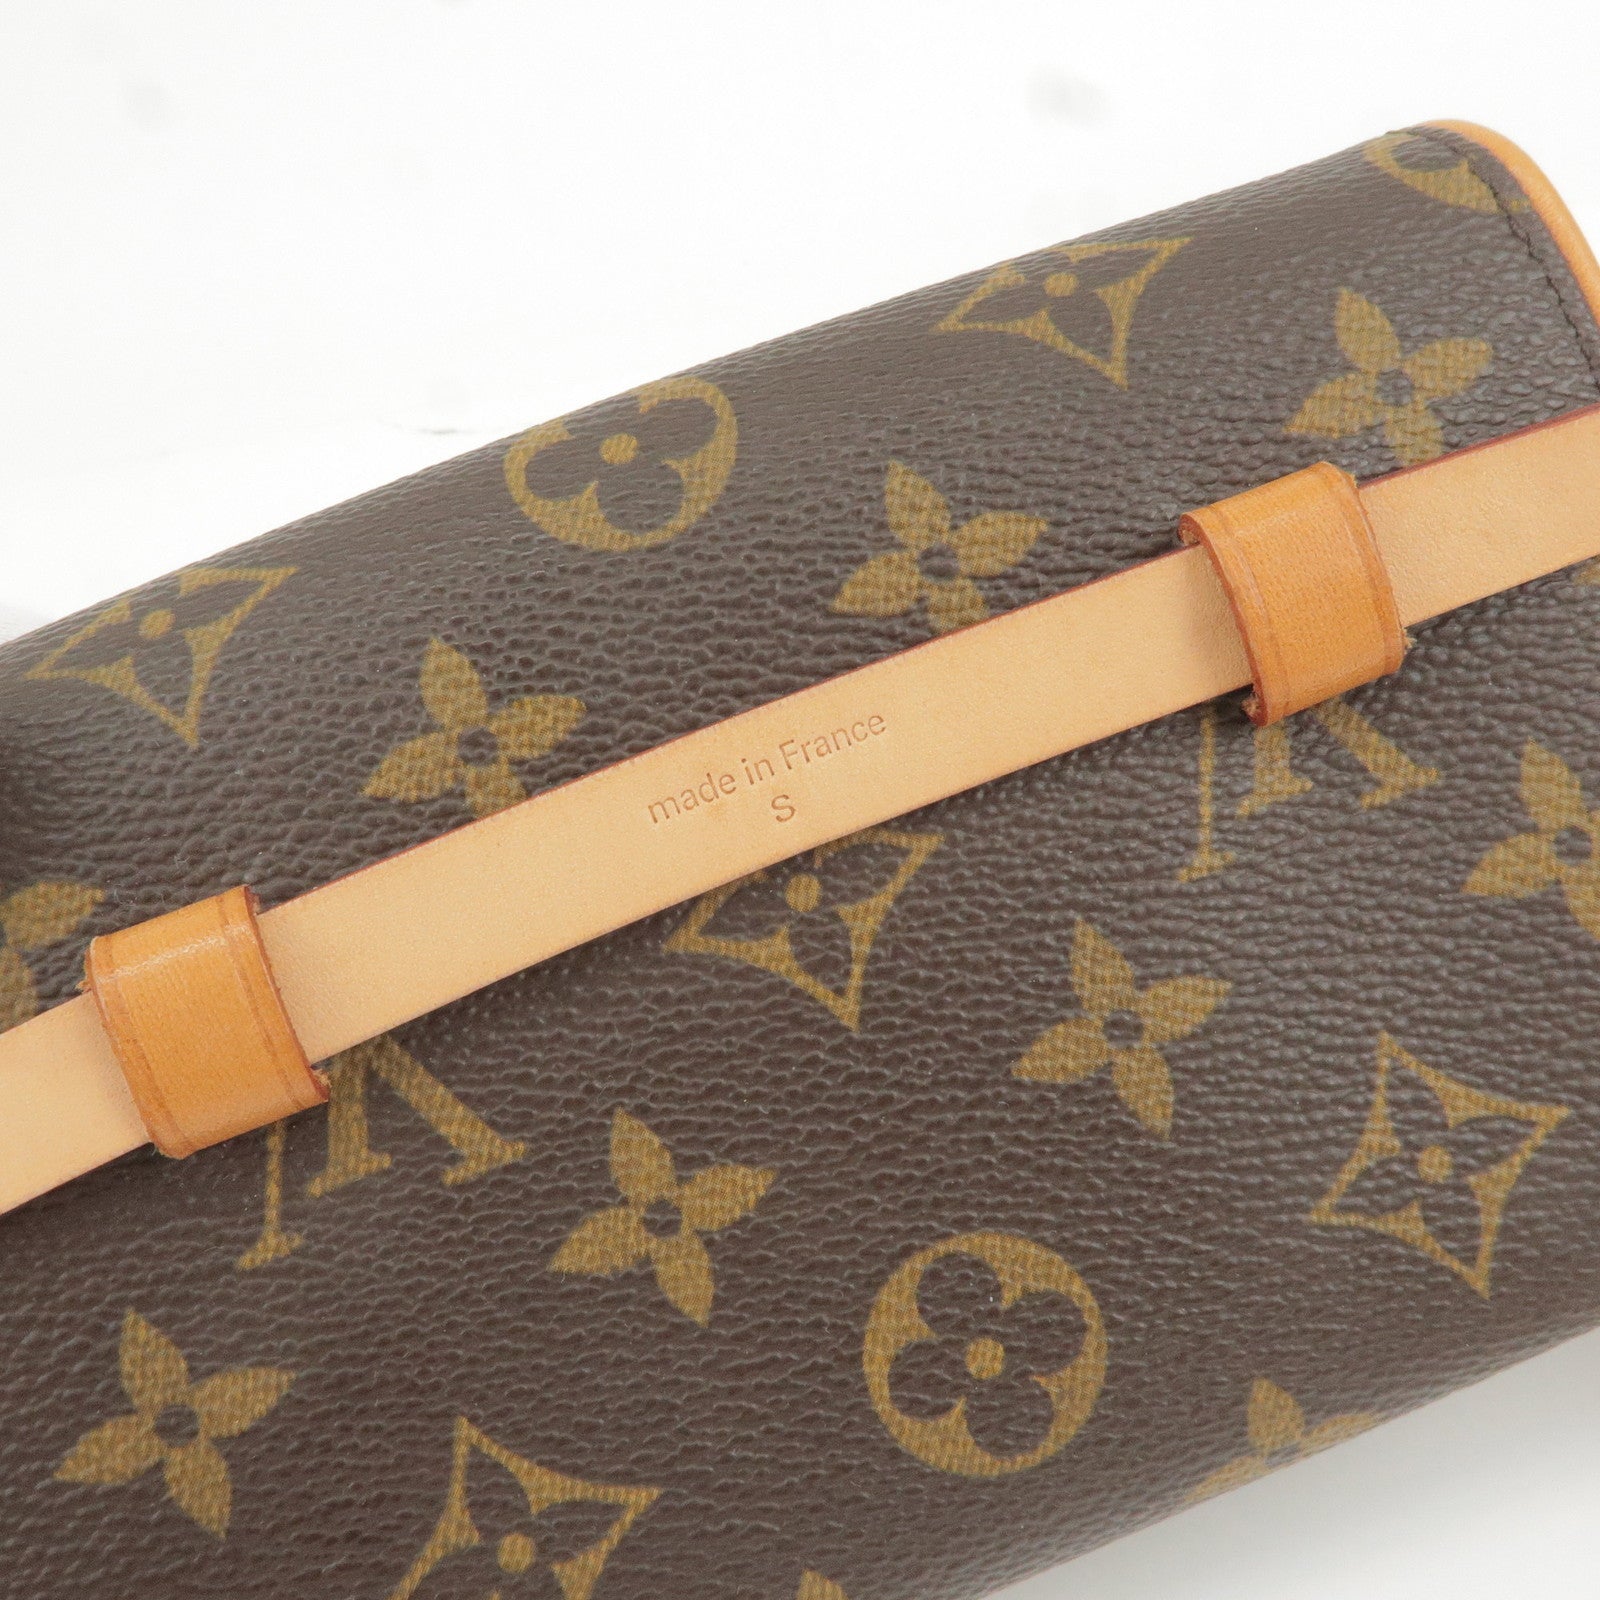 XS - Florentine - Pochette - ep_vintage luxury Store - Waist - M51855 – dct  - Vuitton - Бананка в стиле louis vuitton bumbag сумка - Bag - Louis -  Monogram